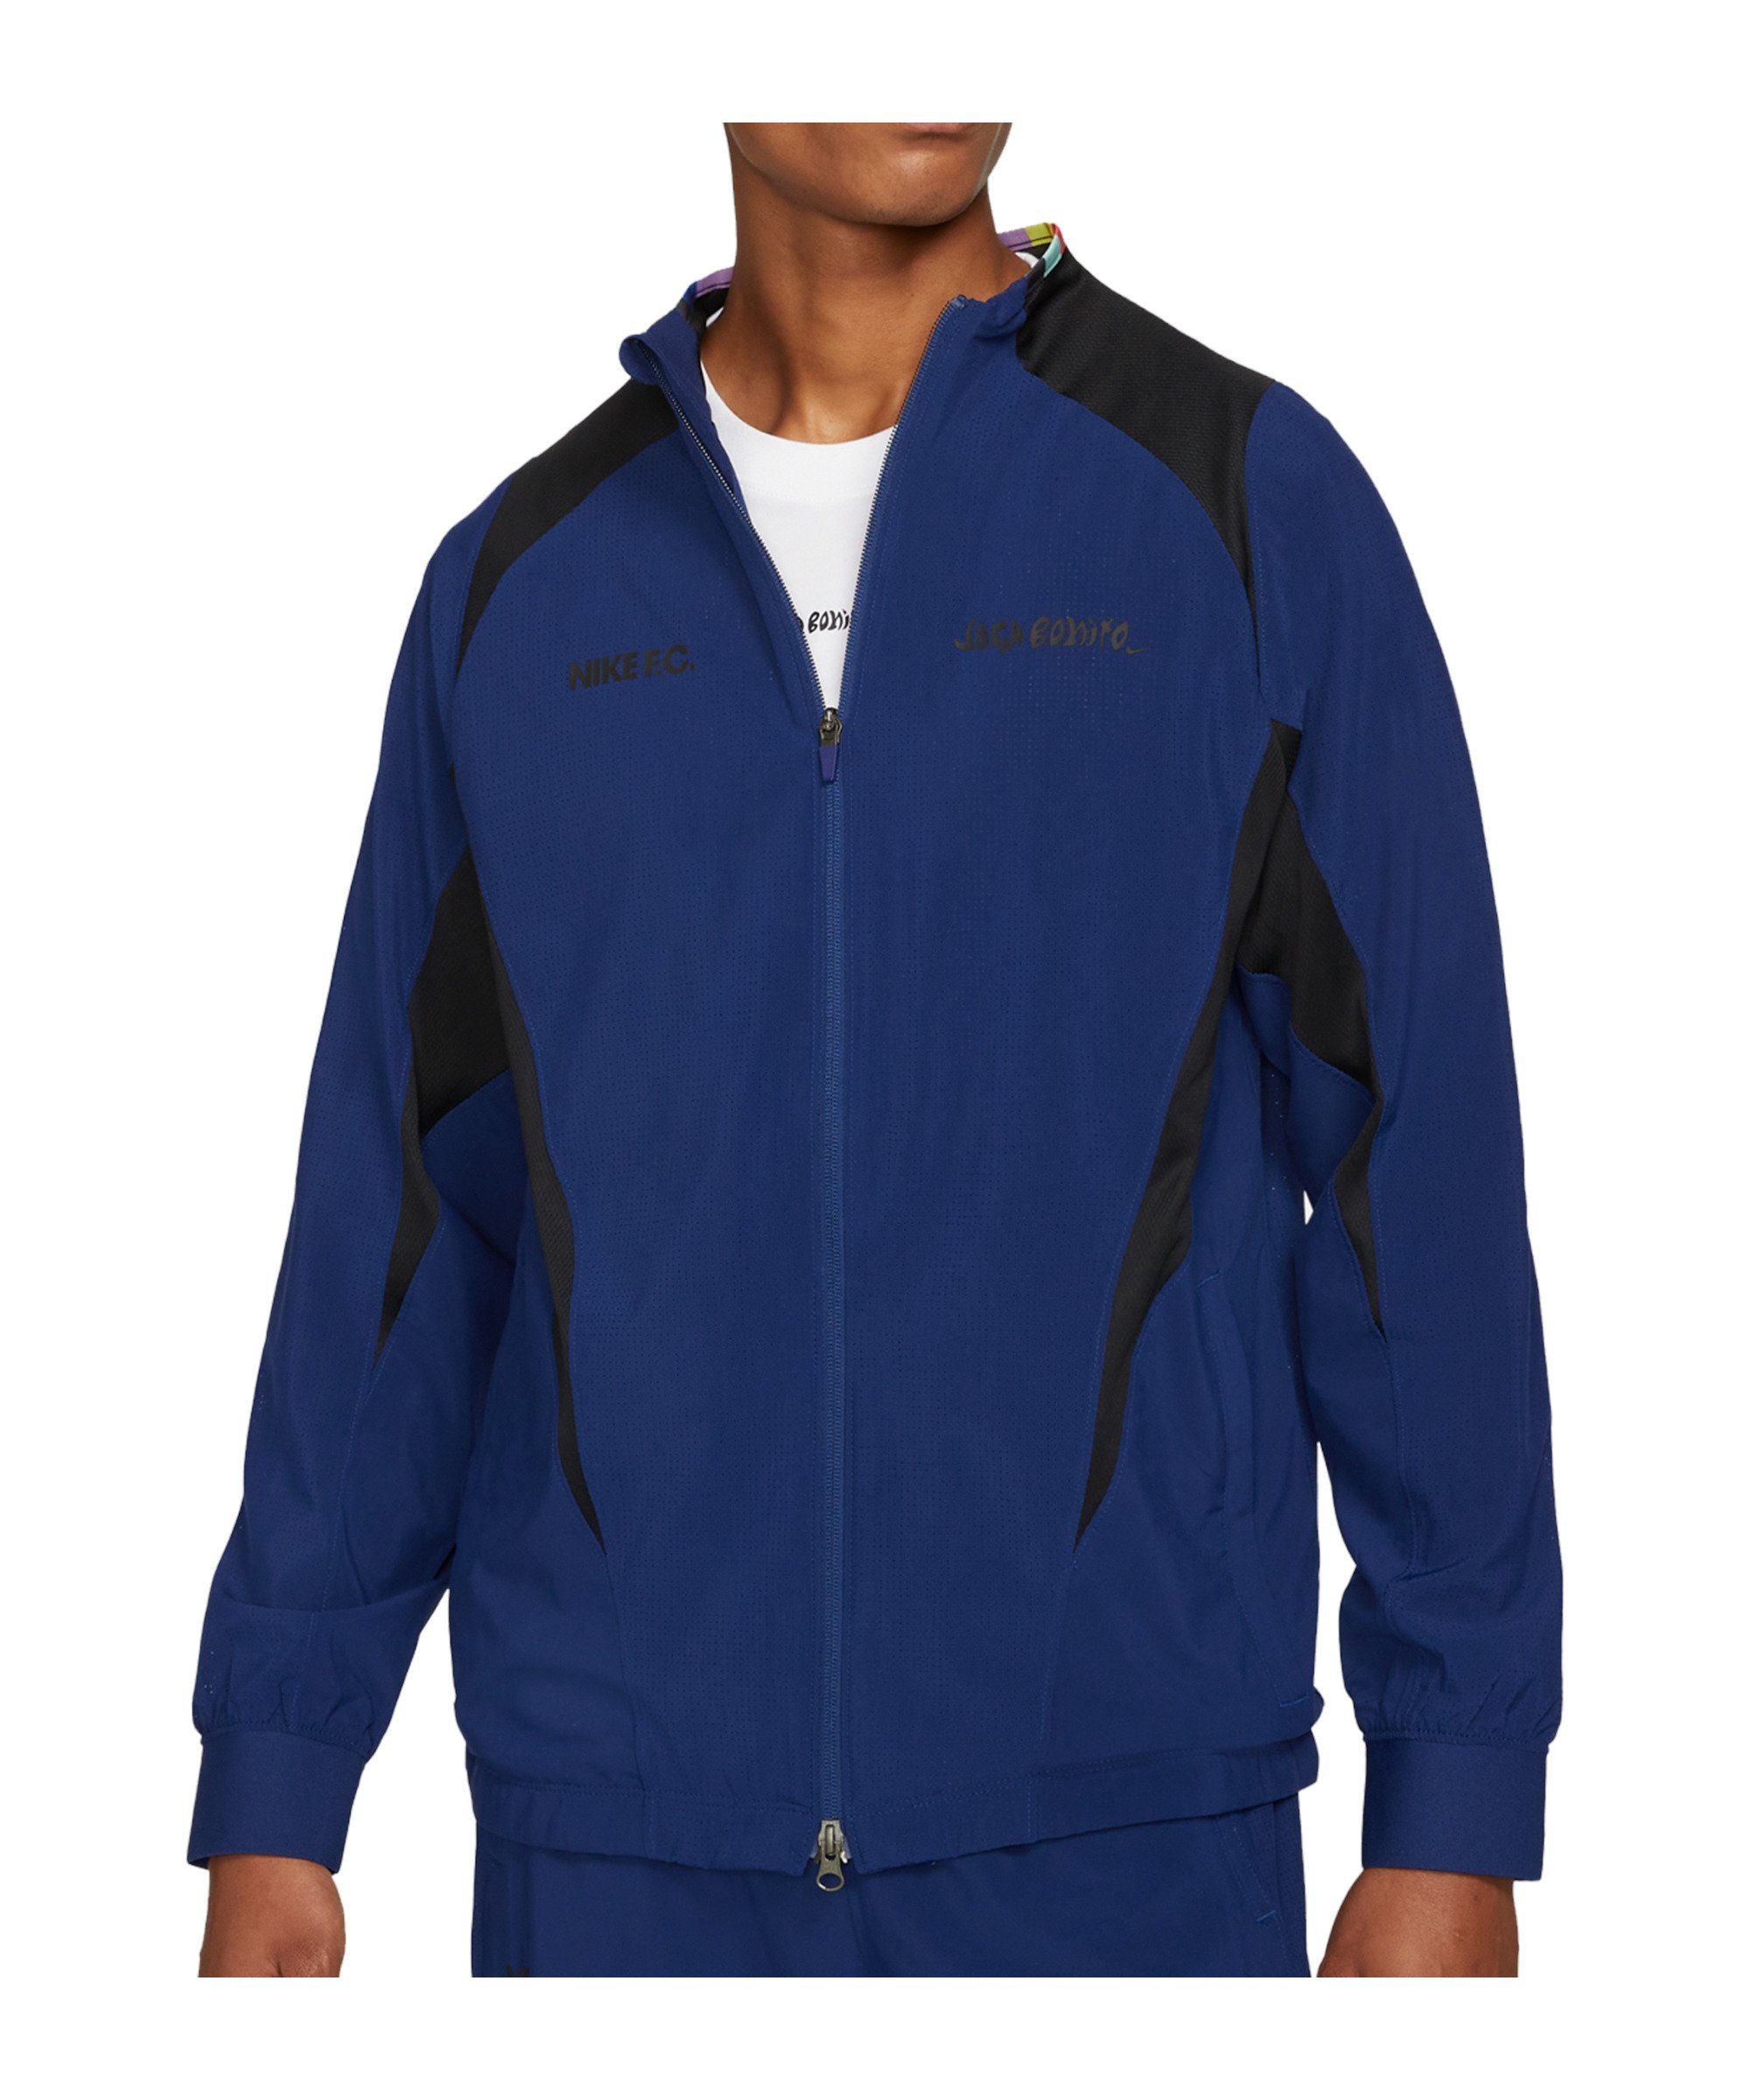 Woven F.C. Nike Sweatjacke Bonito Jacke blauschwarz Joga Sportswear